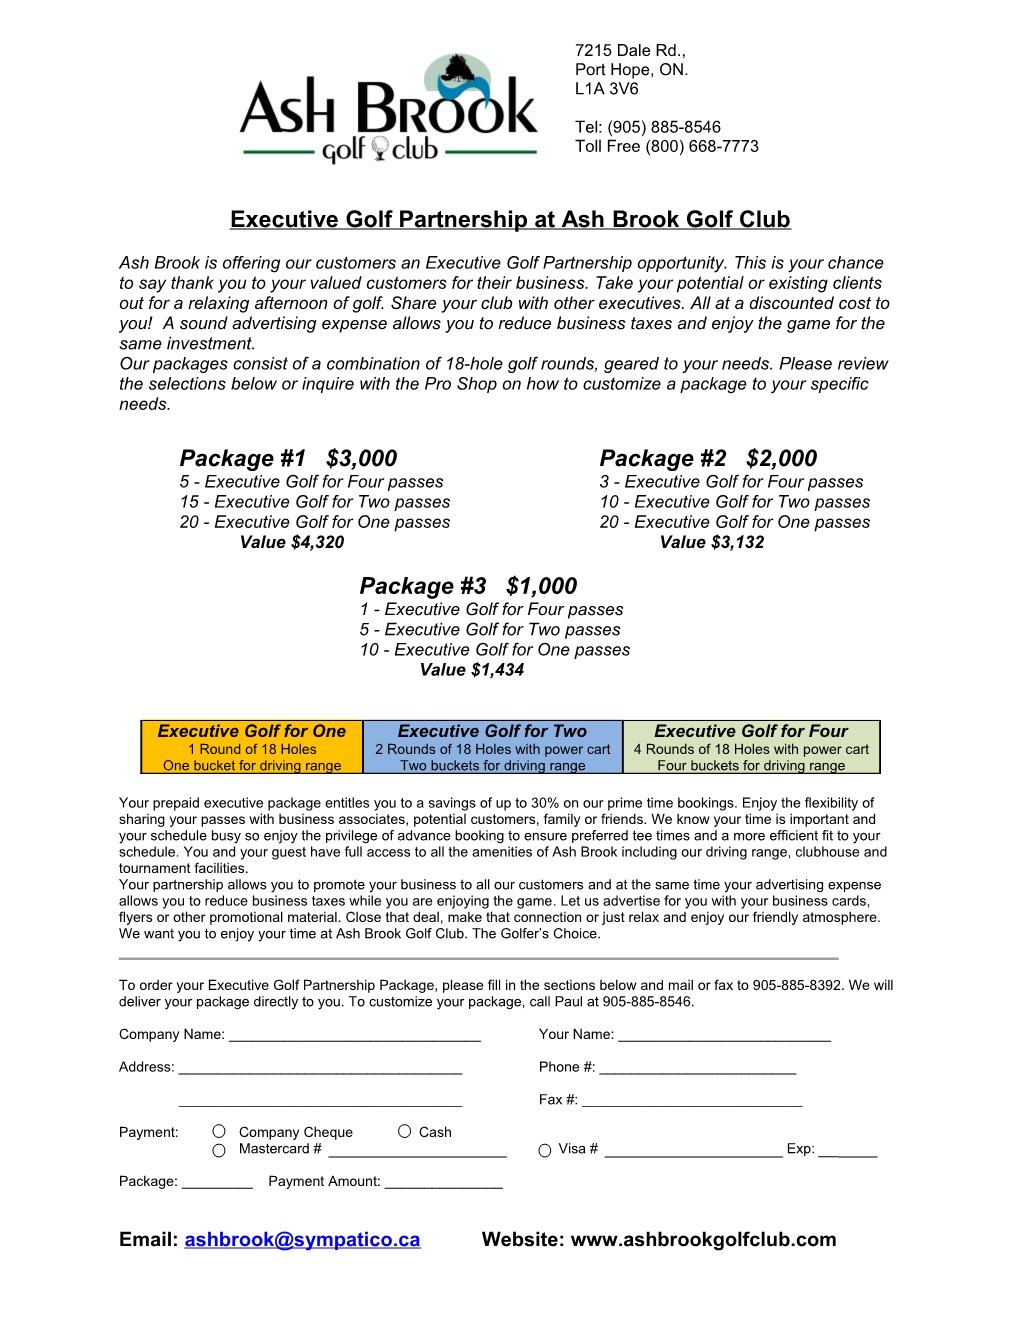 Durham Golf Promotion